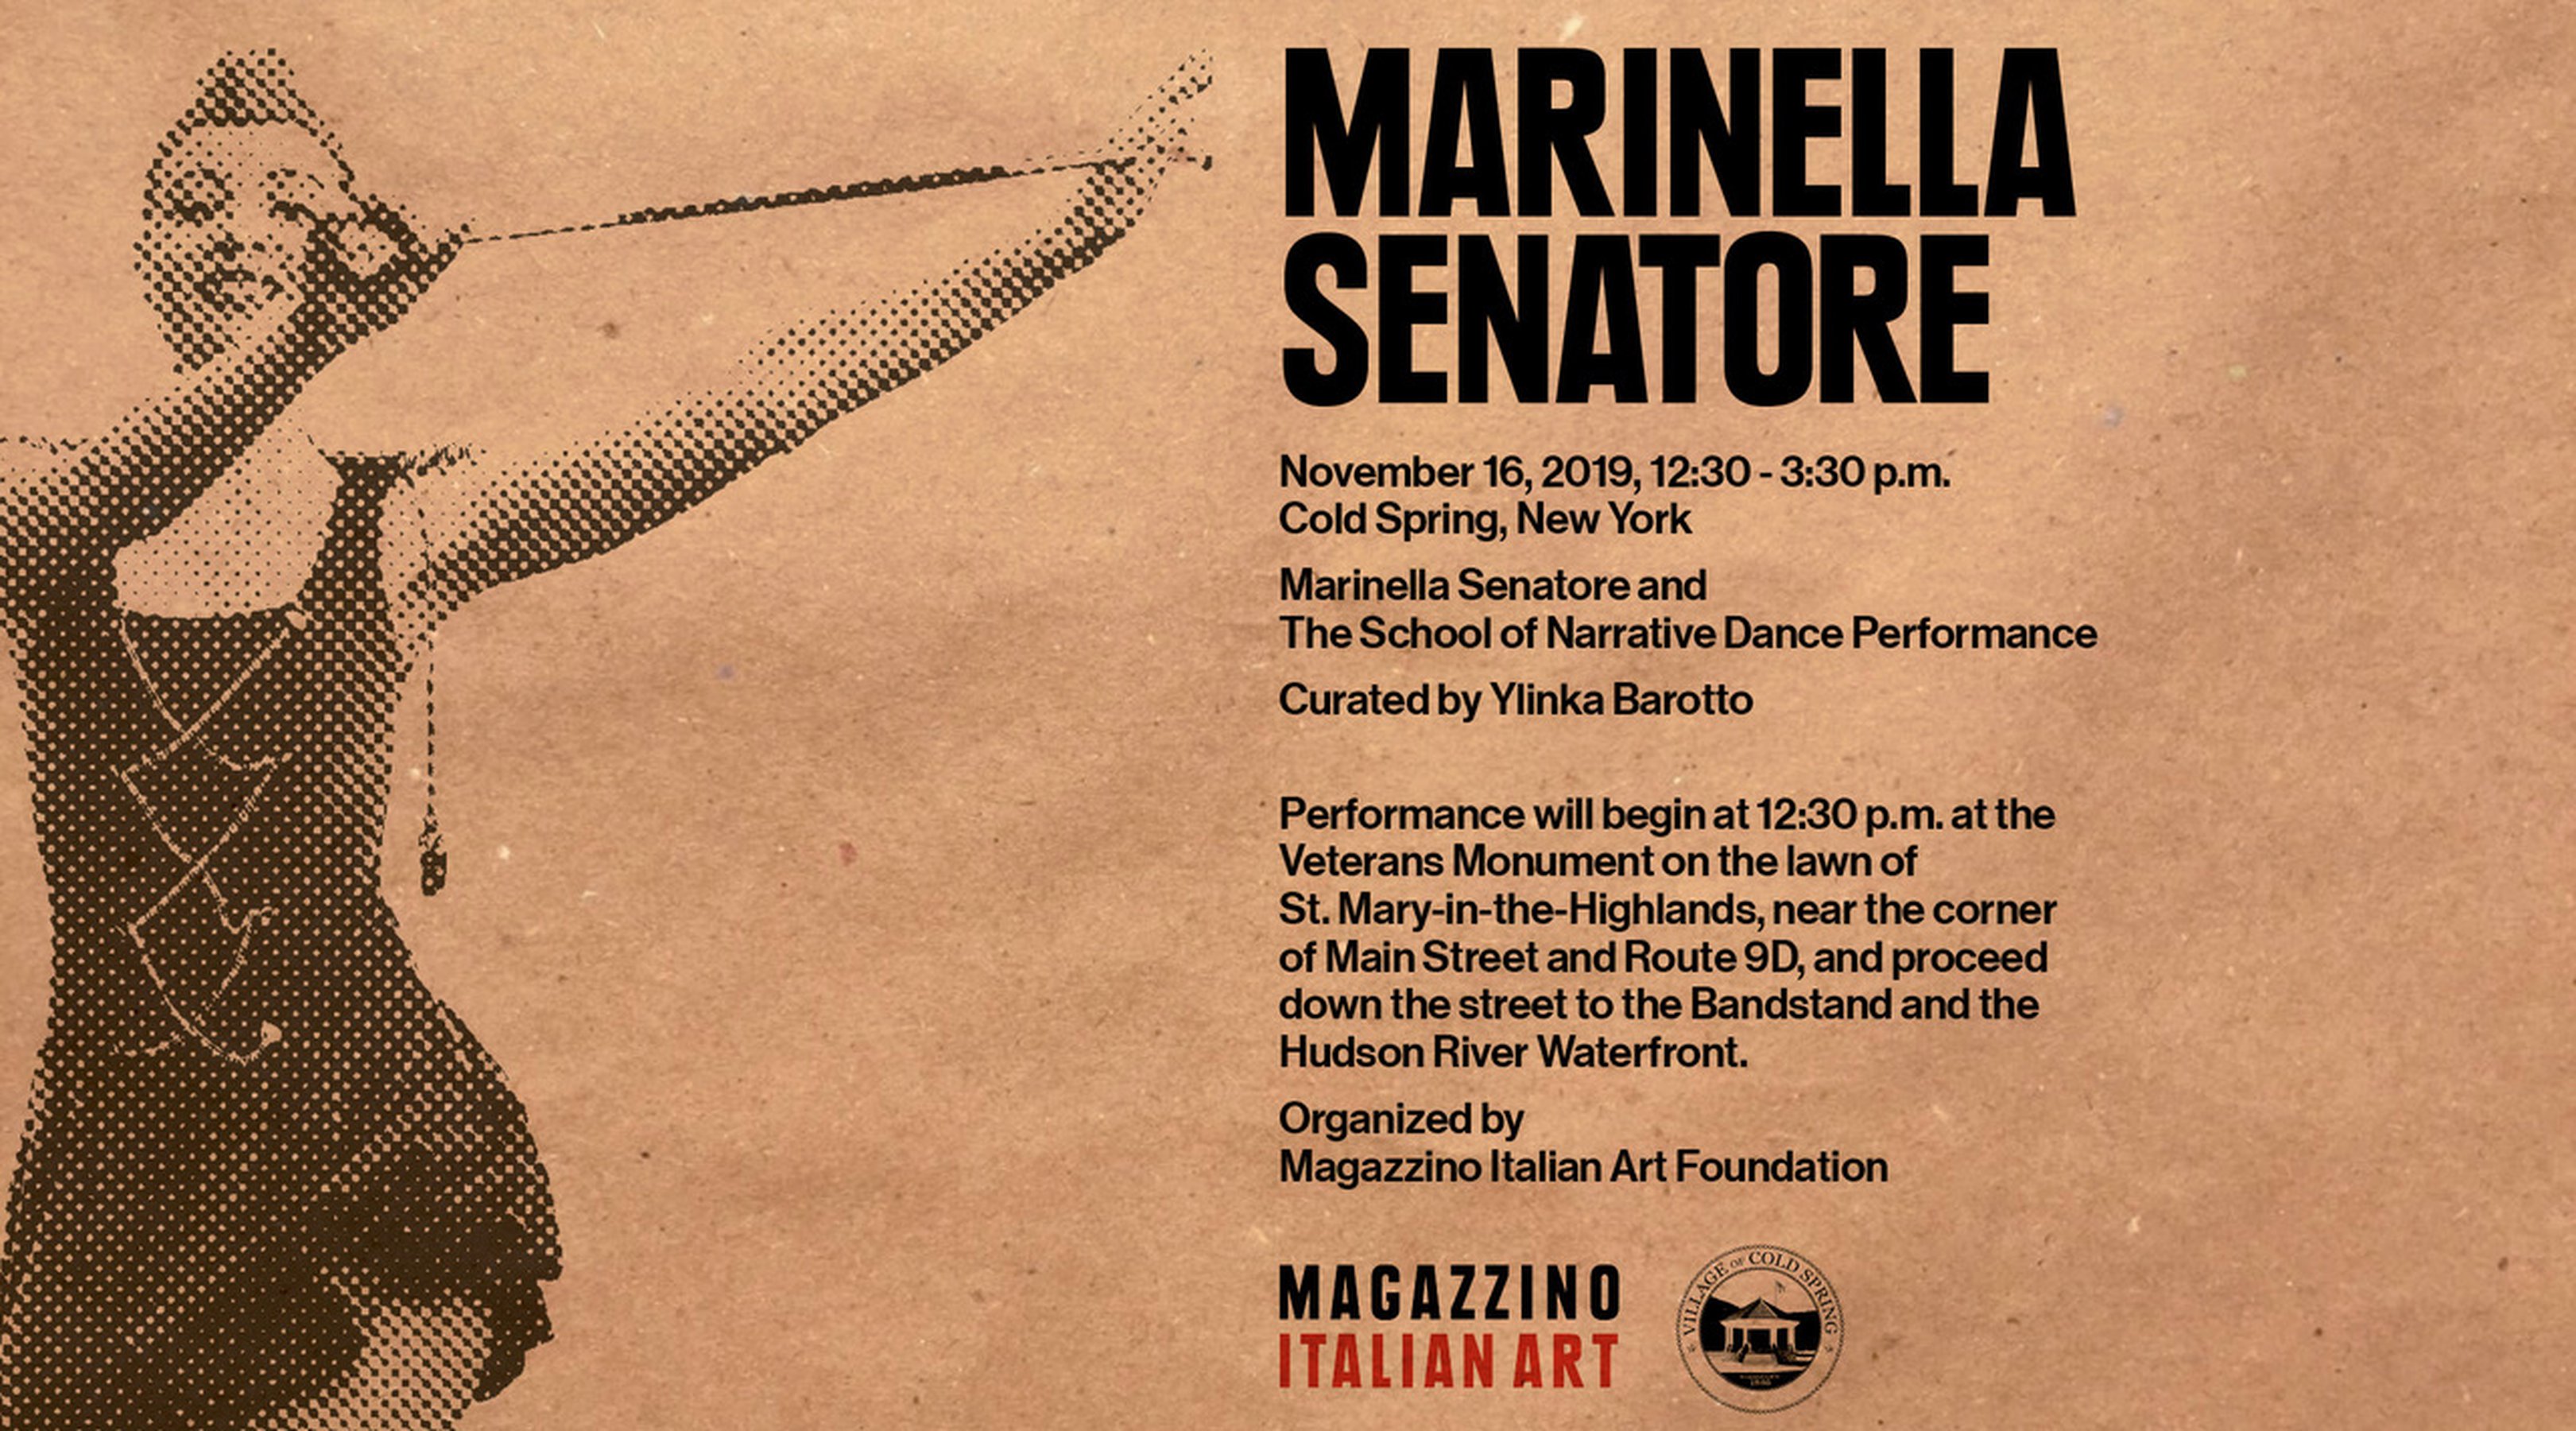 Marinella Senatore and The School of Narrative Dance Performance